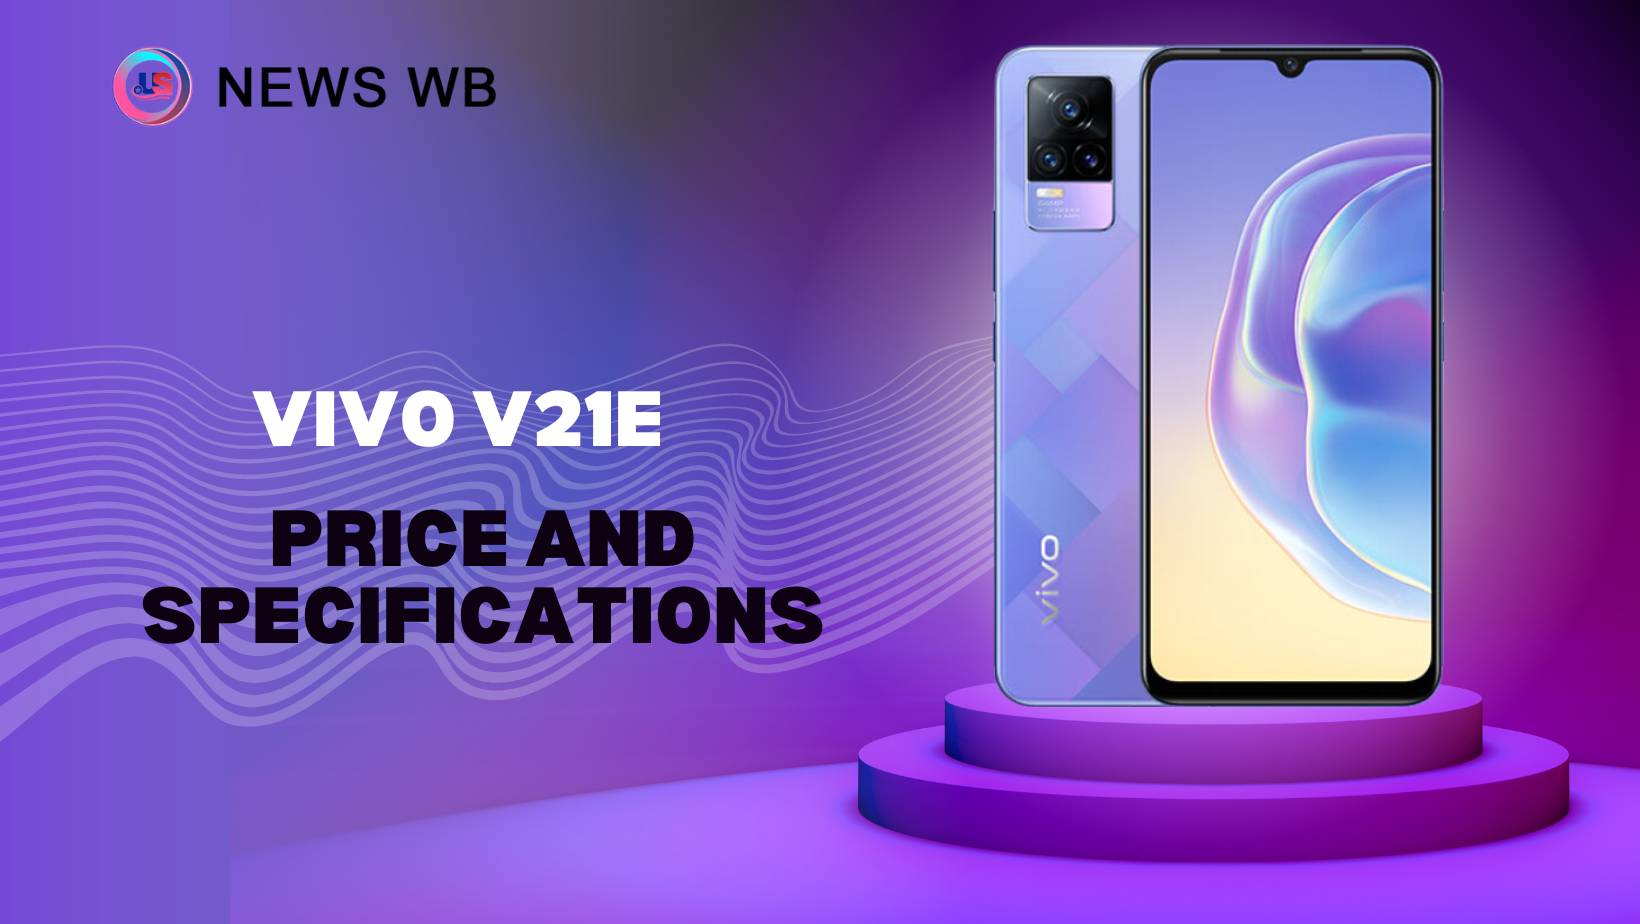 Vivo V21e Price and Specifications